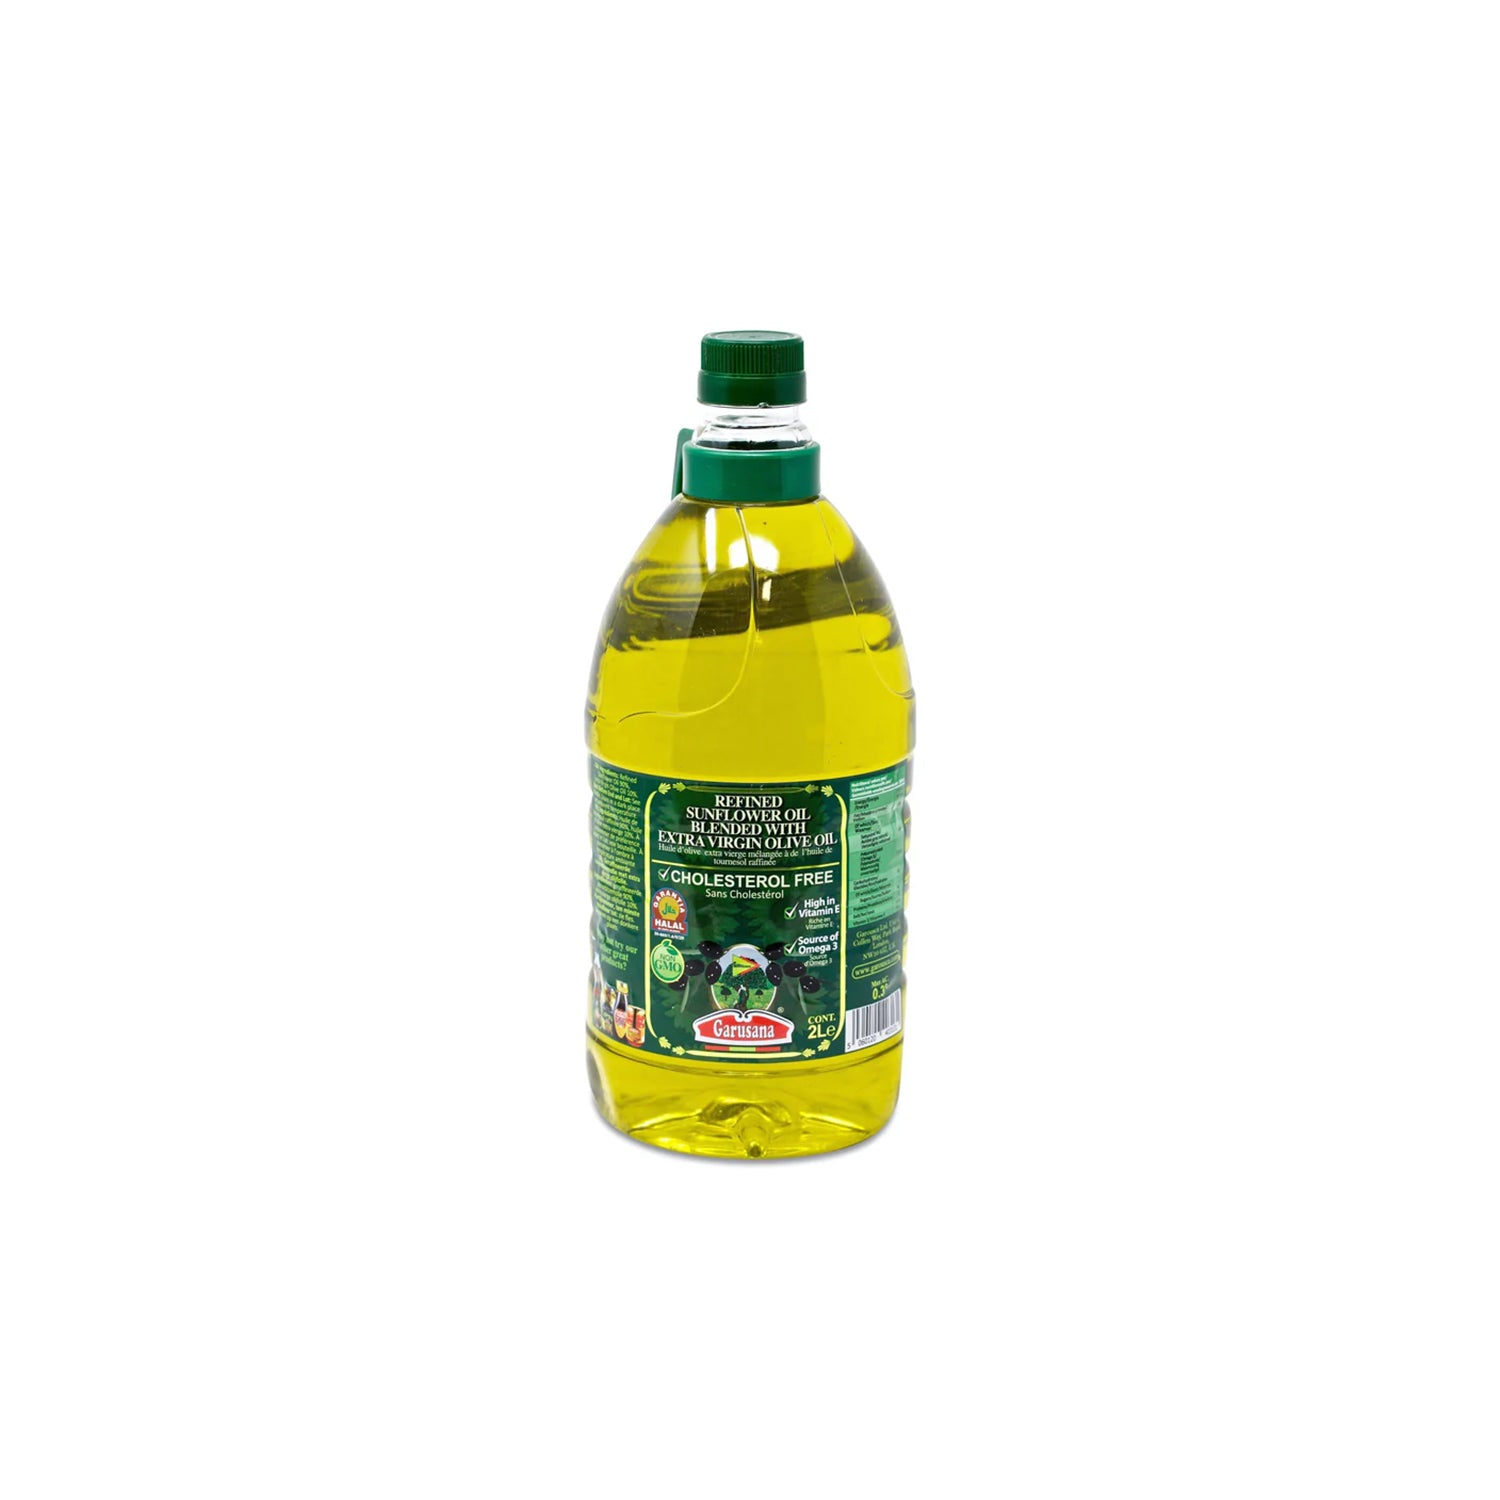 Garusana Refined Sunflower Oil Blended With Extra Virgin Olive Oil 2L